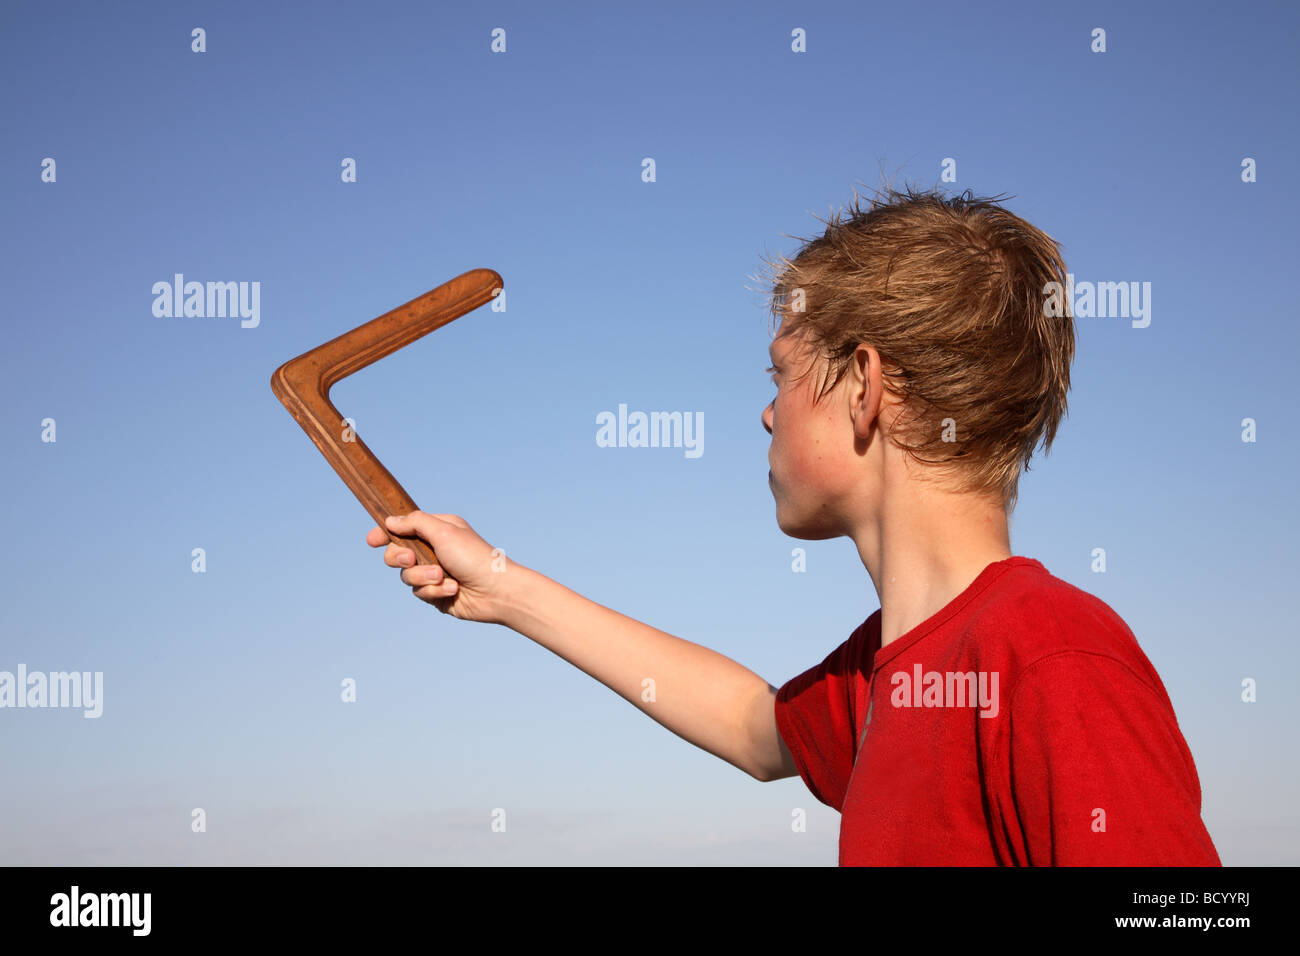 older teenage boy ready to throw a returning boomerang on the beach BCYYRJ